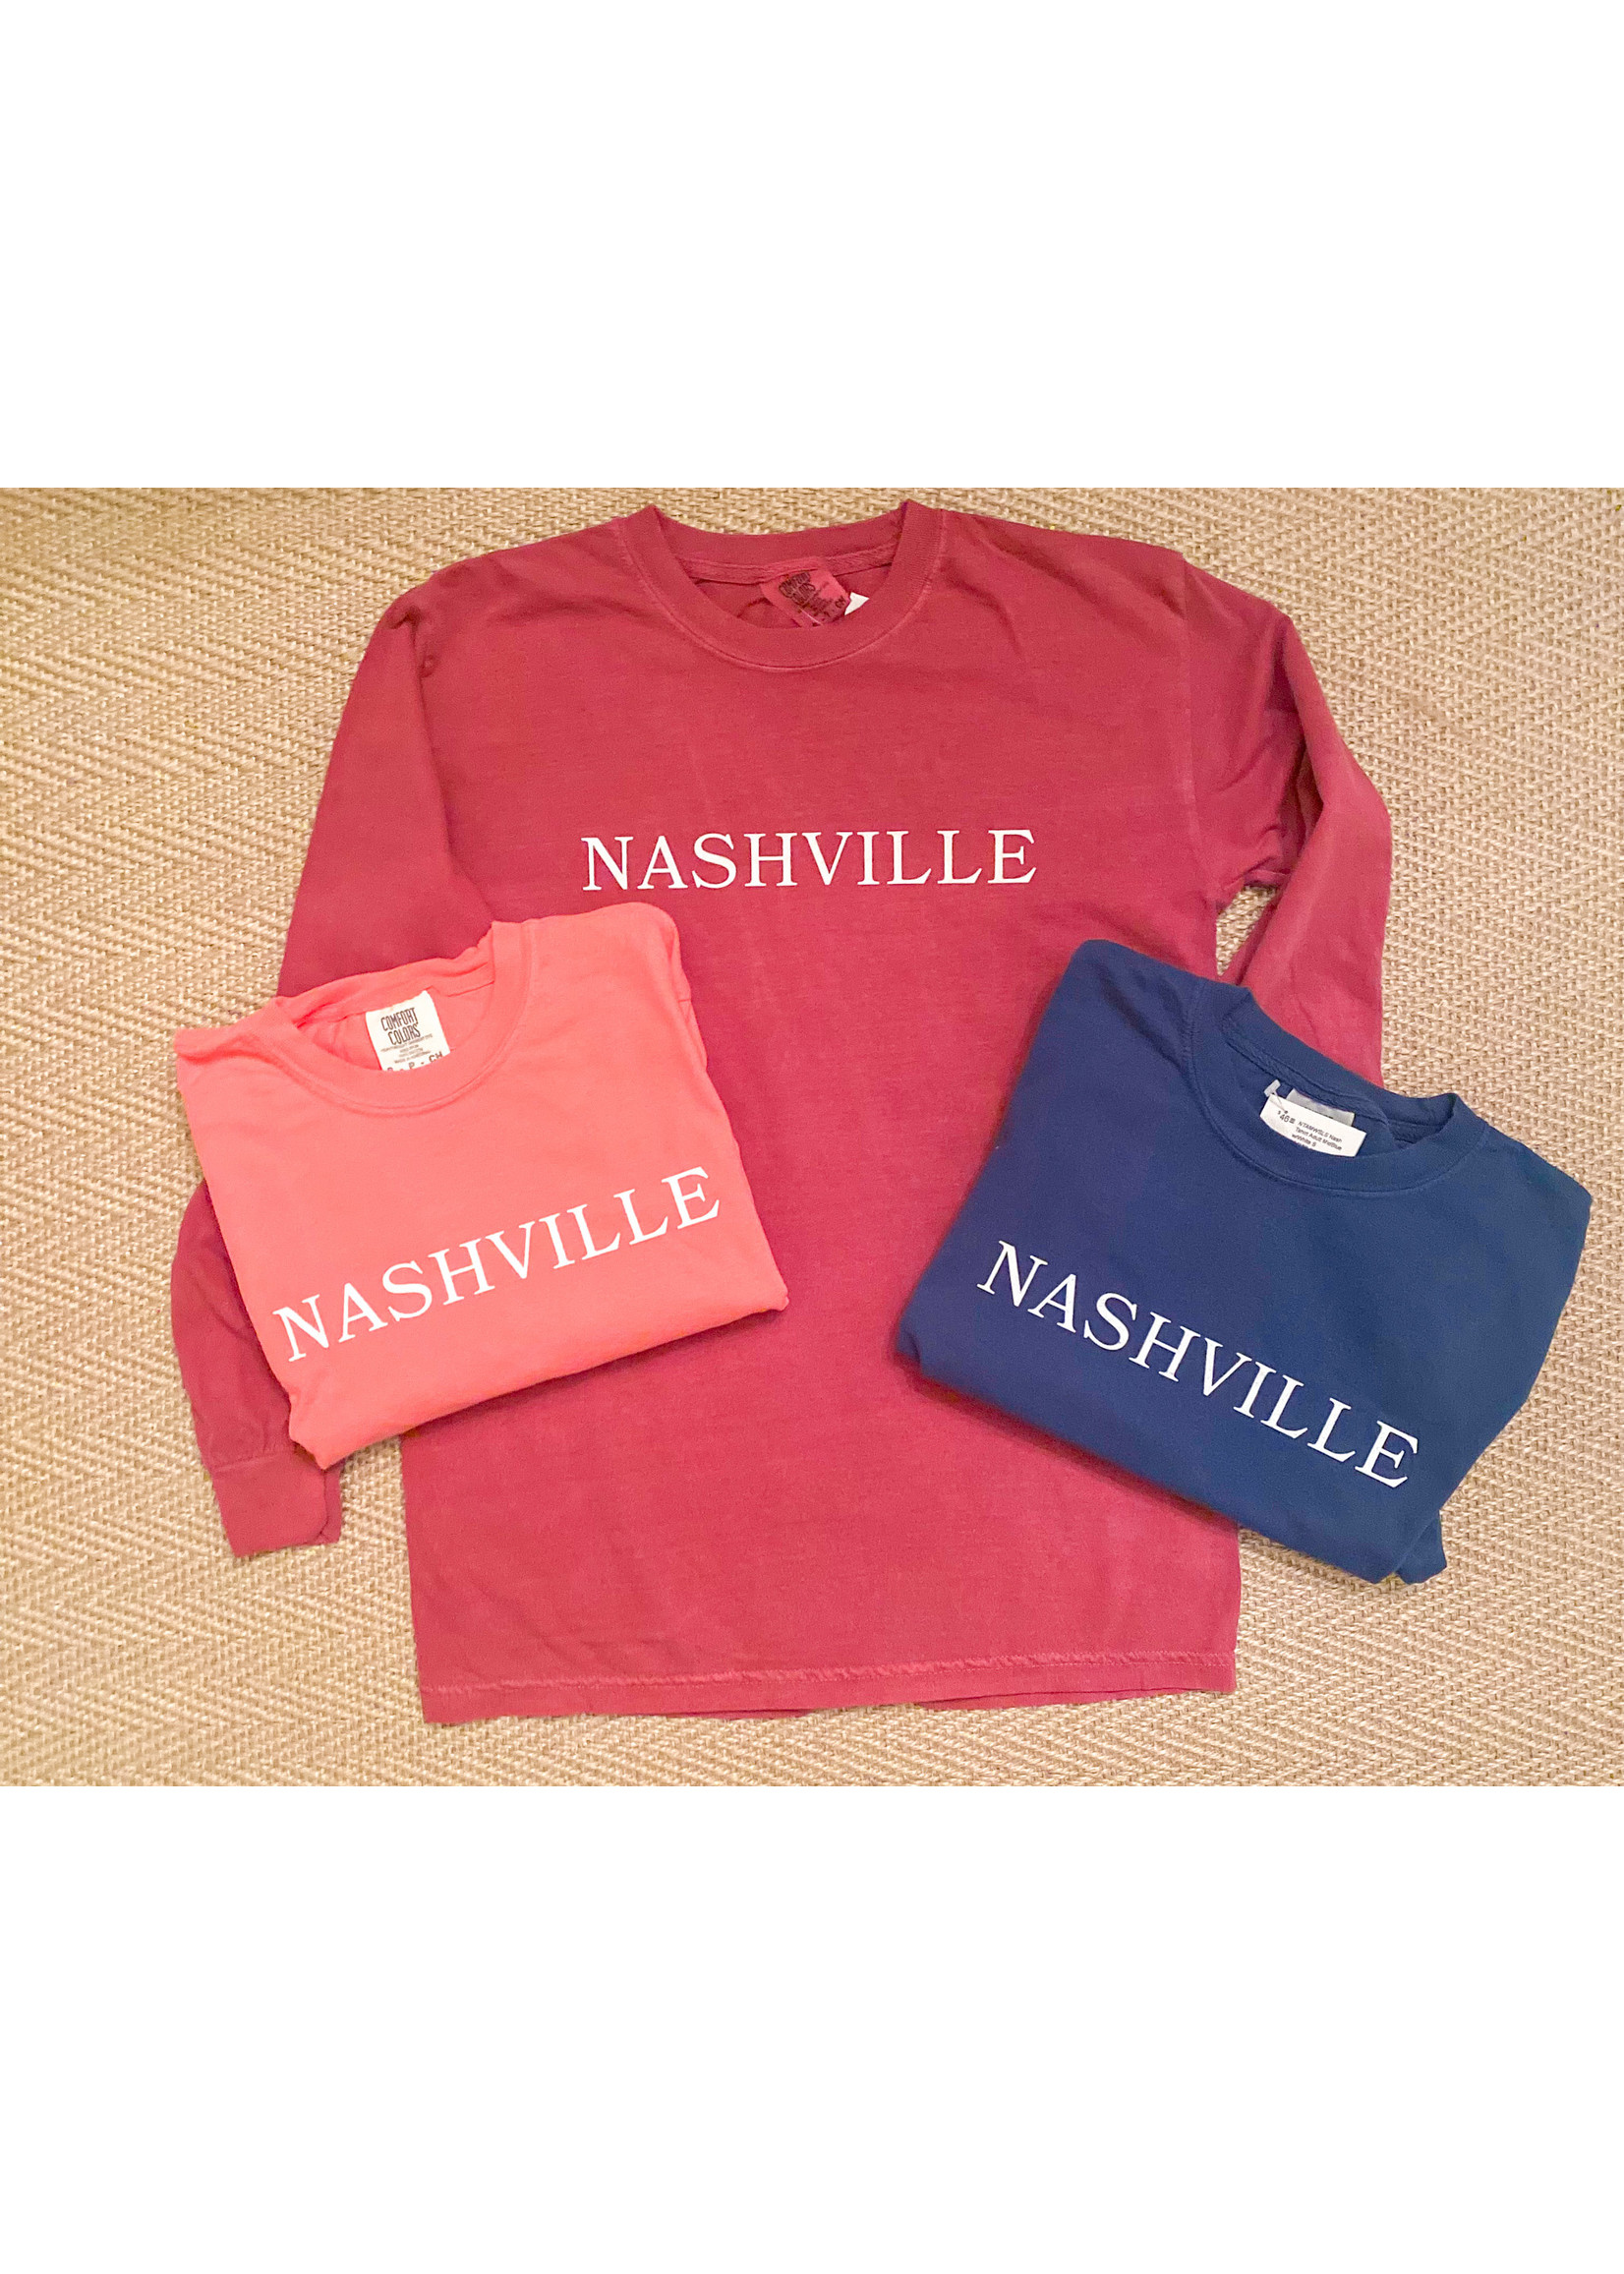 Simplistated Nashville Long Sleeve Tshirt Adult